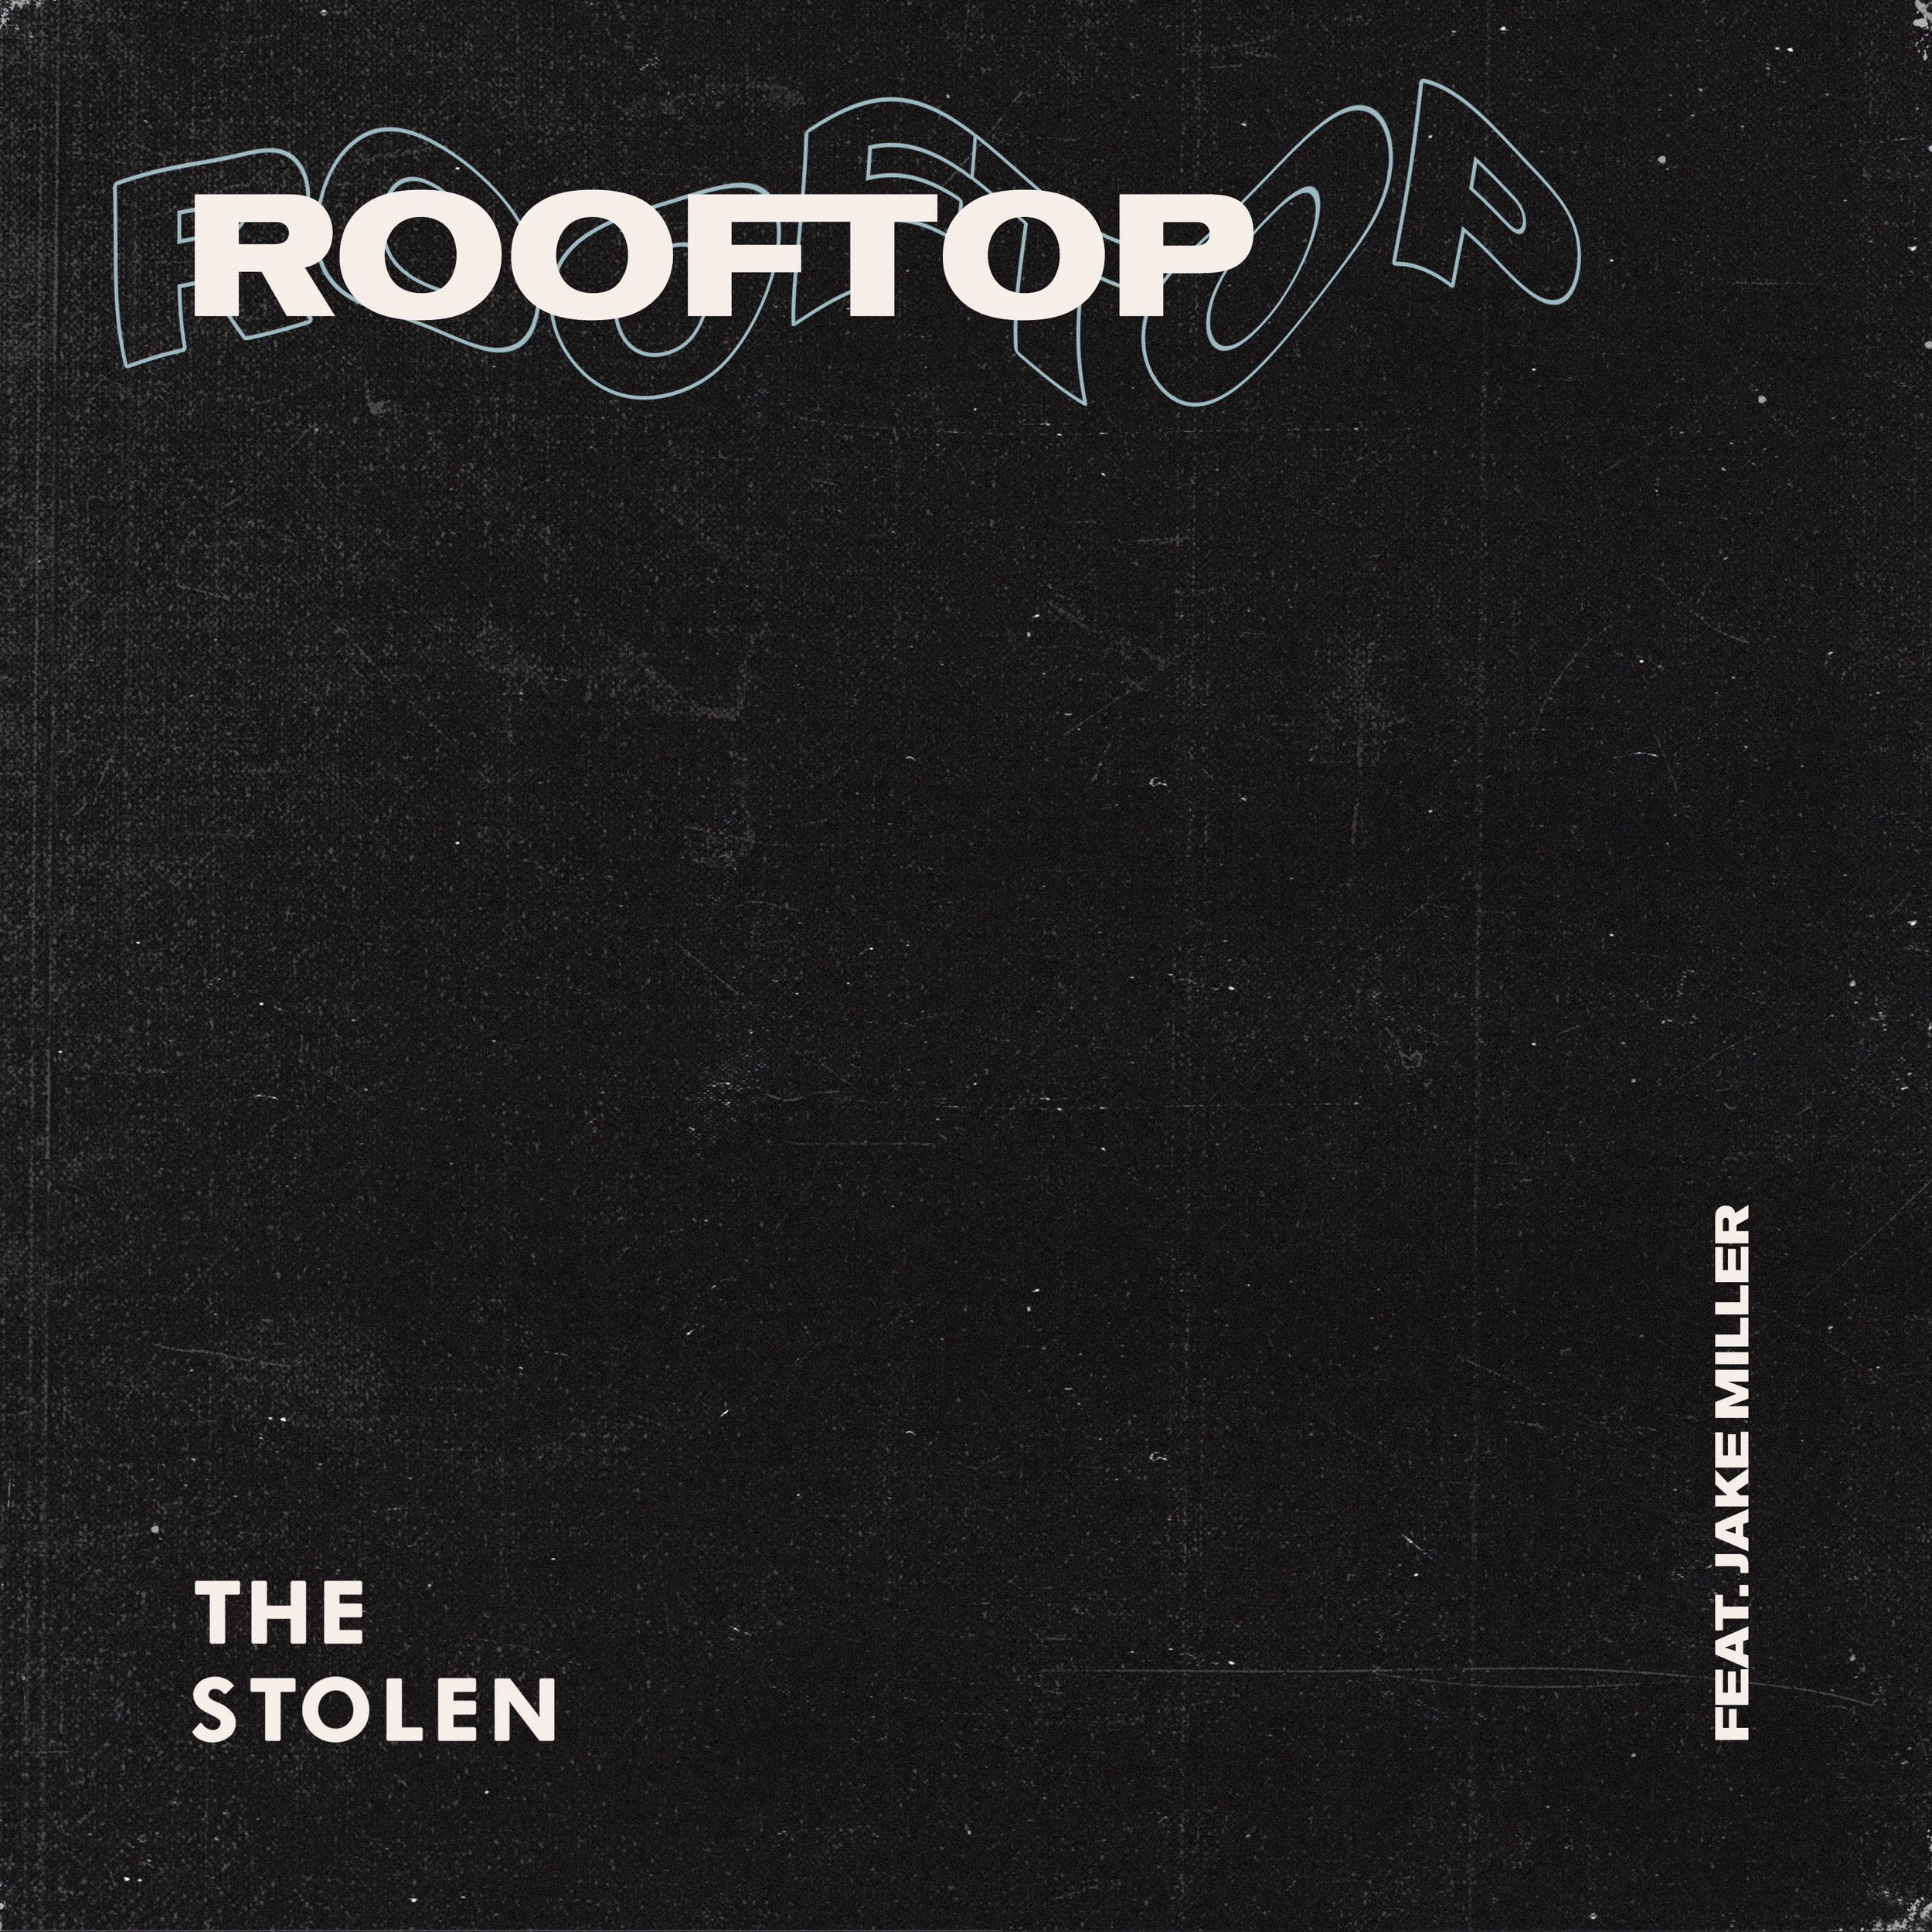 The Stolen - "Rooftop" (Feat. Jake Miller)